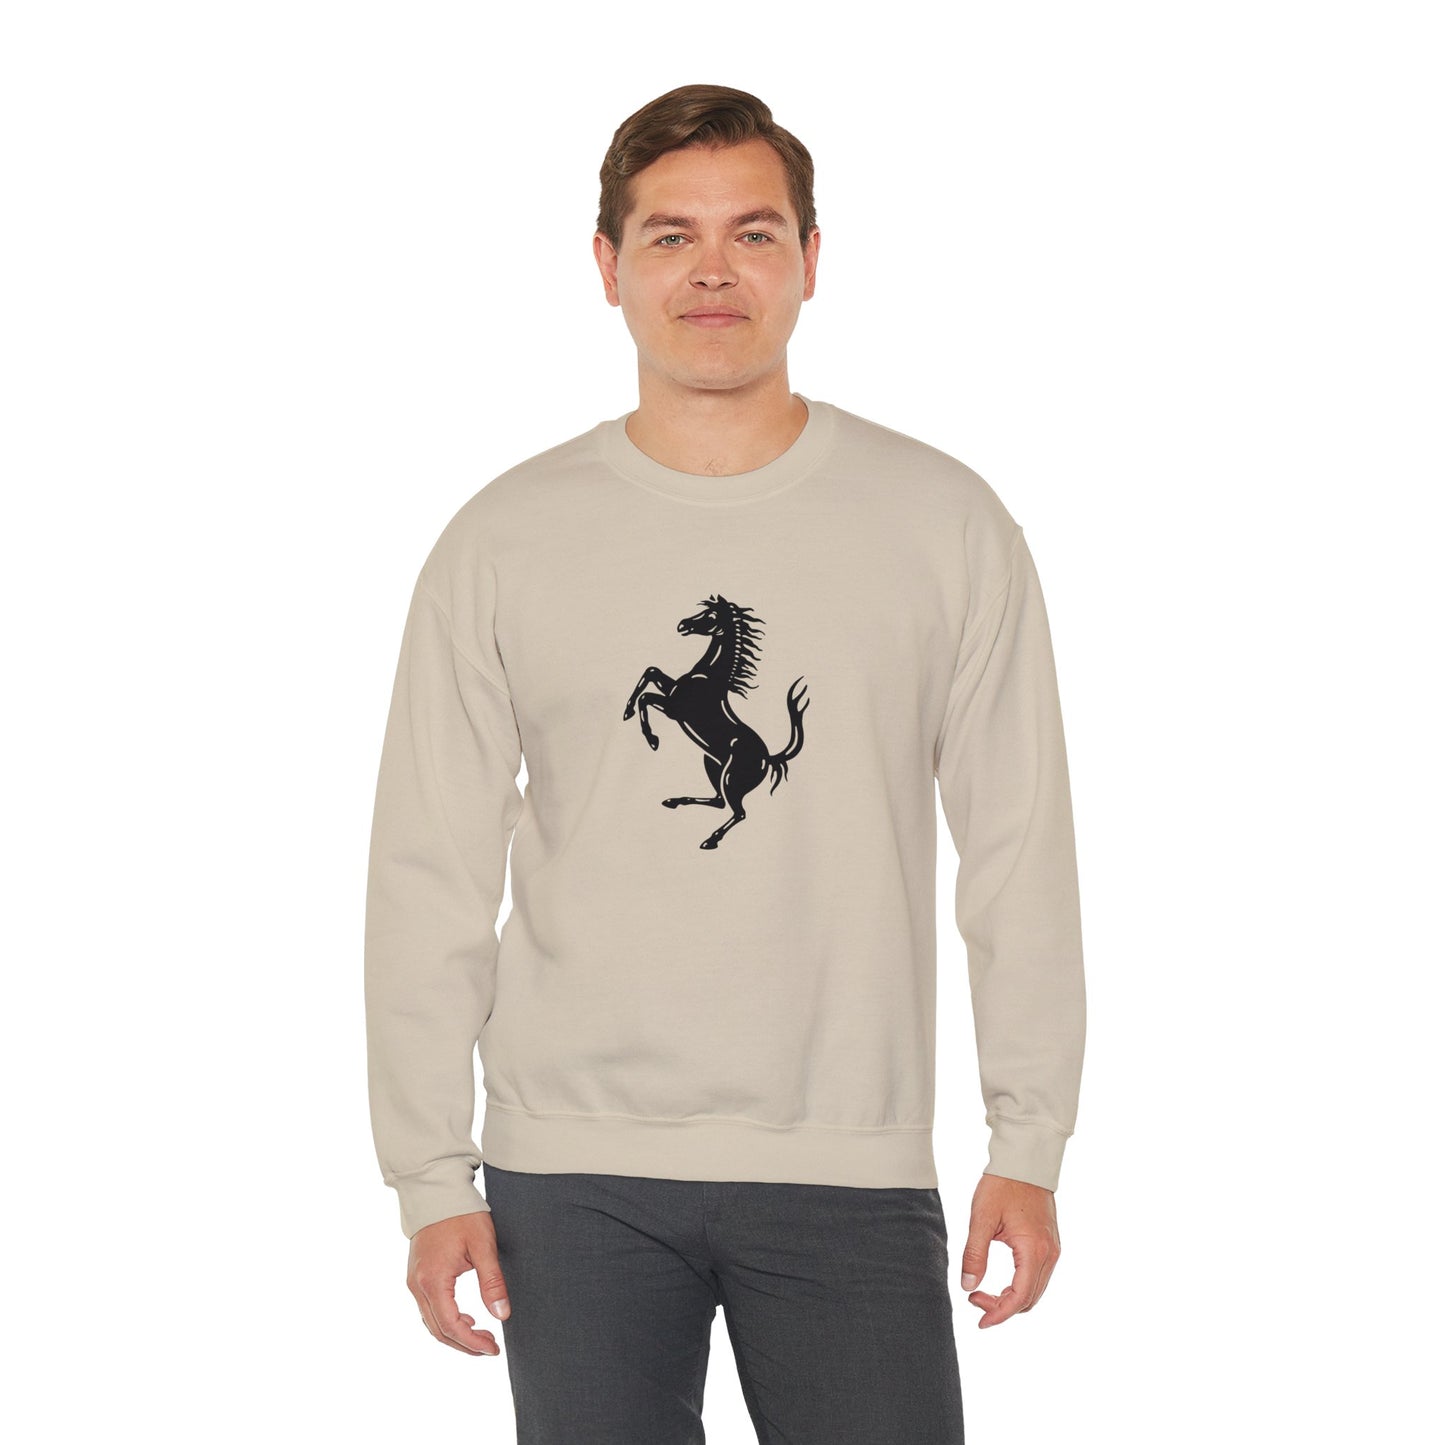 Ferrari Prancing Horse Sweatshirt